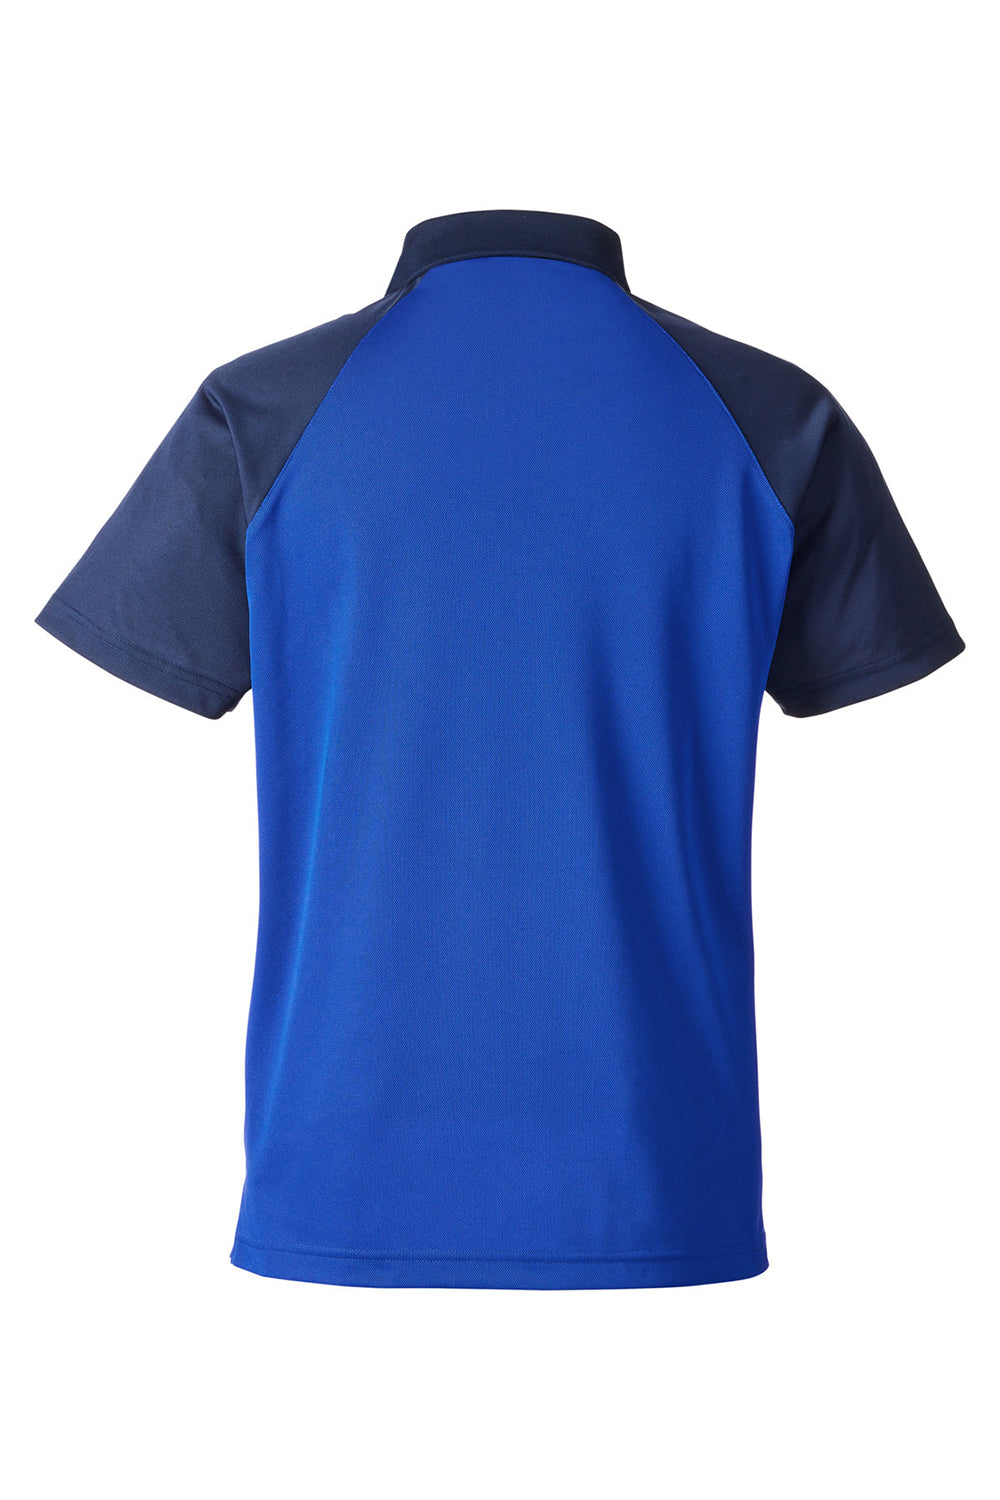 Team 365 TT21C Mens Command Colorblock Moisture Wicking Short Sleeve Polo Shirt Royal Blue/Dark Navy Blue Flat Back